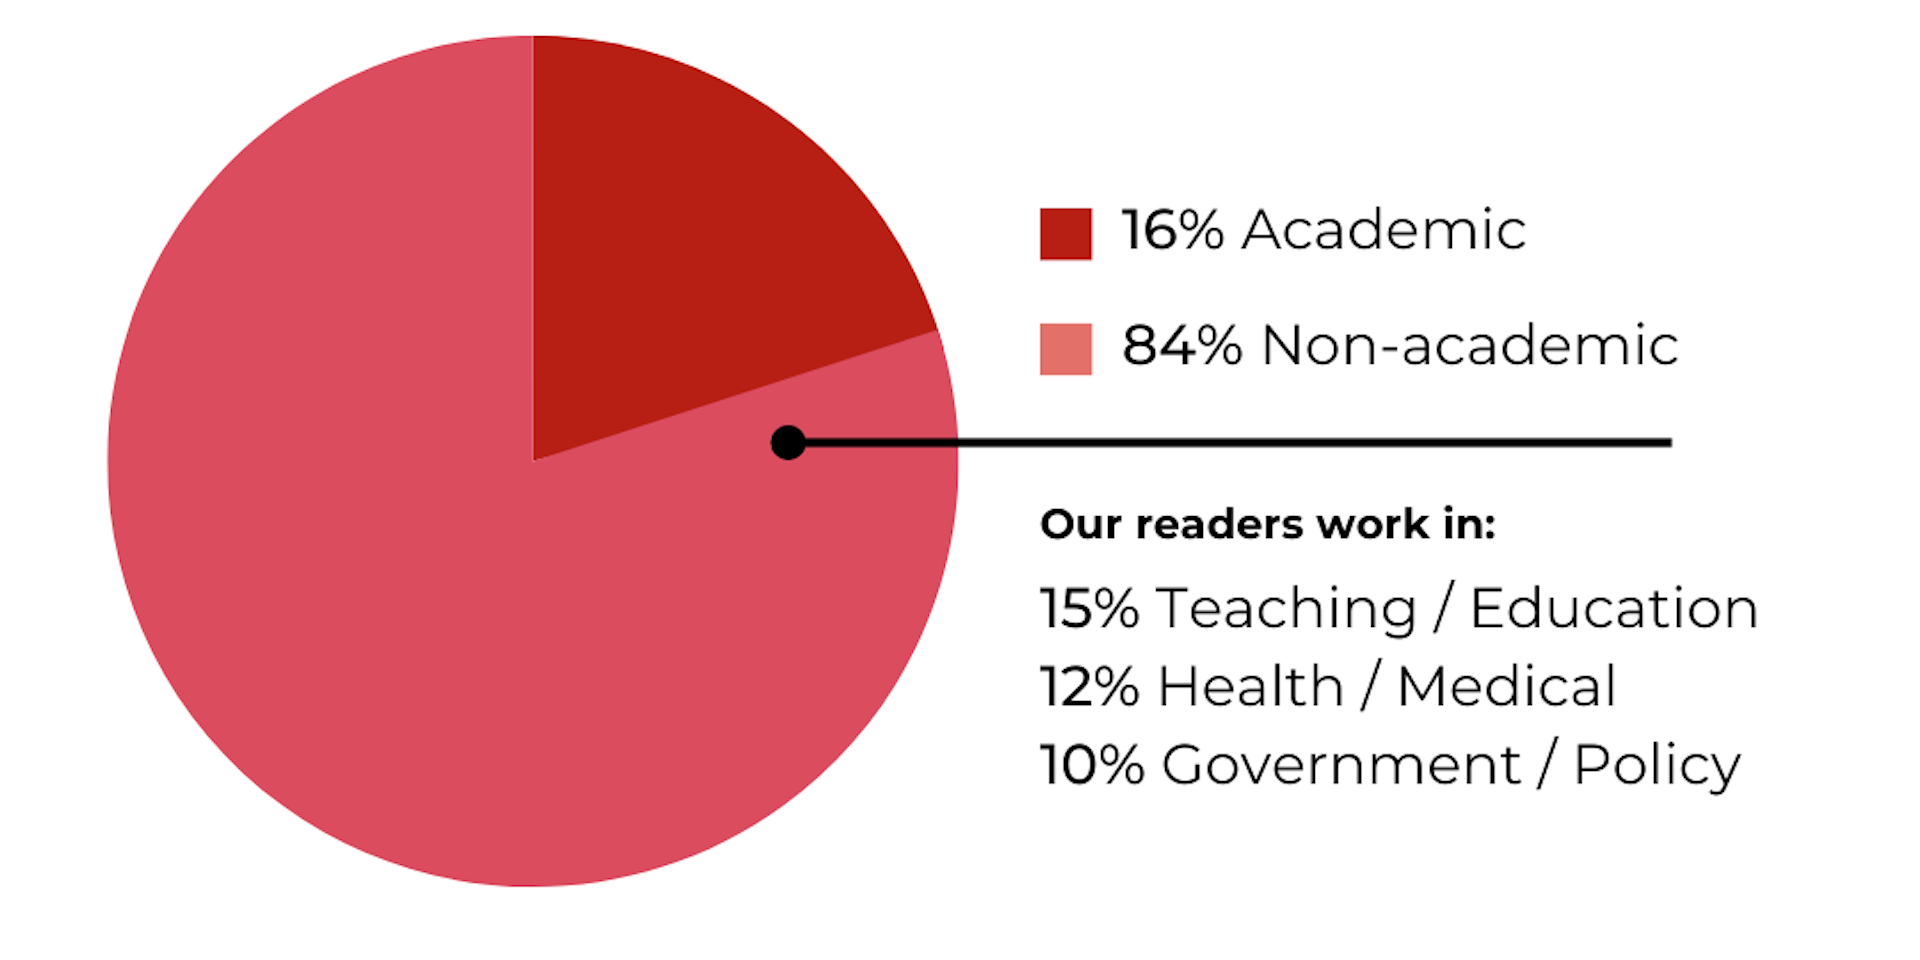 Academic readership statistics